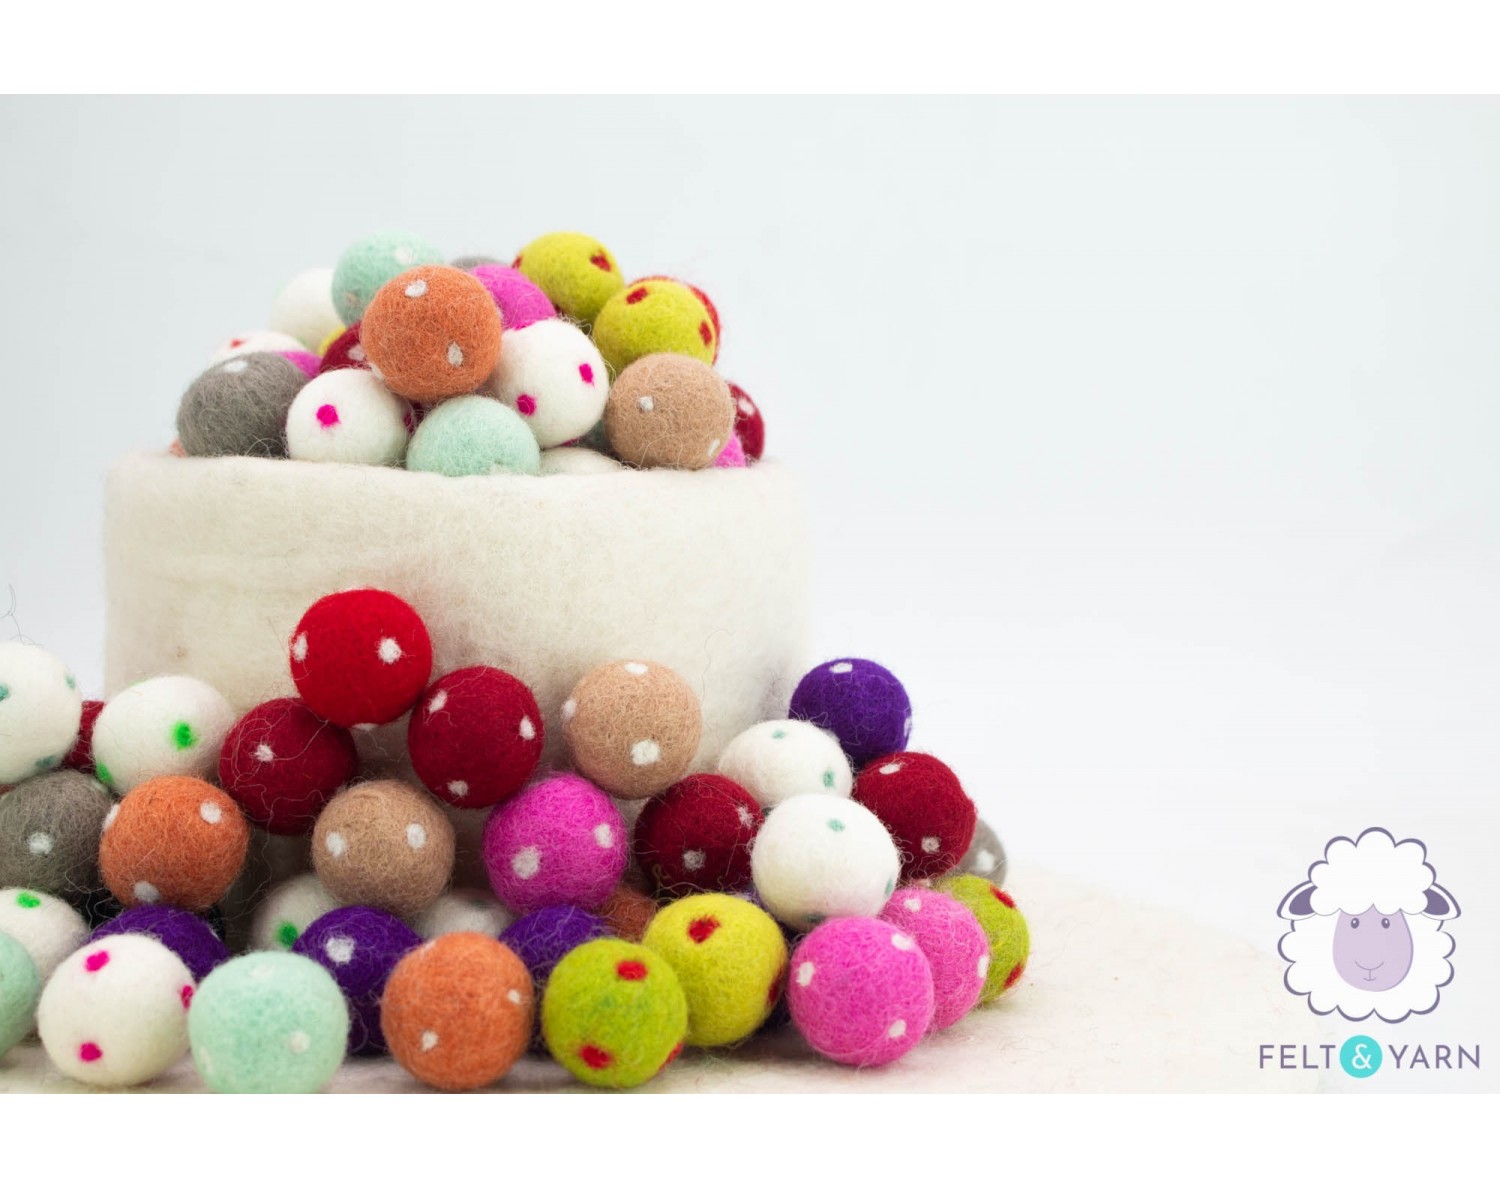 2.5cm Wholesale Felt Balls [100 Colors] - Felt and Yarn